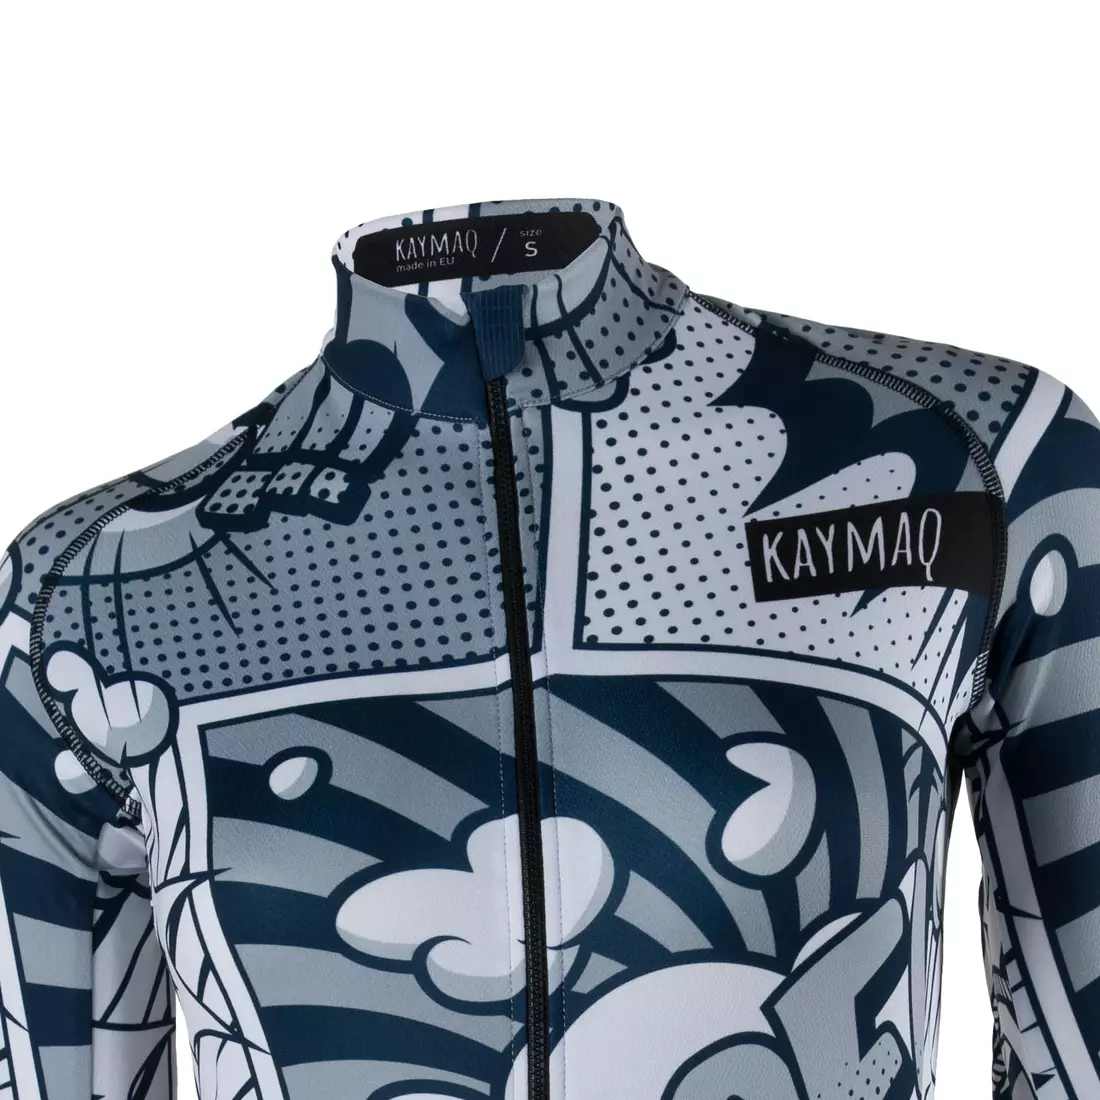 [Set] KAYMAQ DESIGN W24 dámsky cyklistický dres + KAYMAQ DESIGN W24 dámsky cyklistický dres krátky rukáv